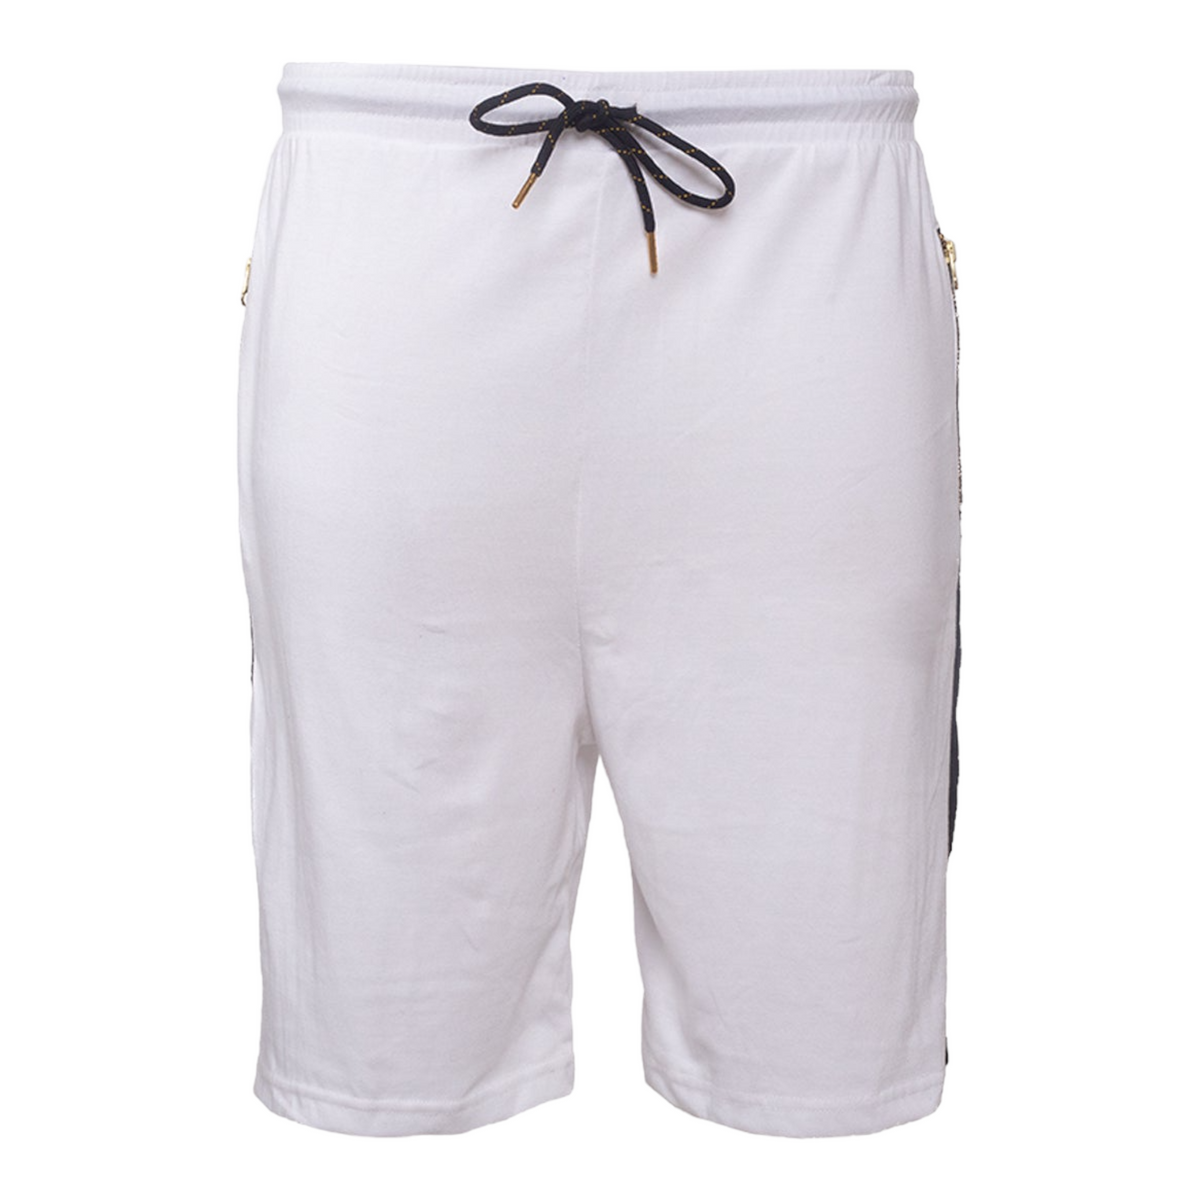 MDB Brand Men's Lightweight Cotton Shorts - Bright Colors